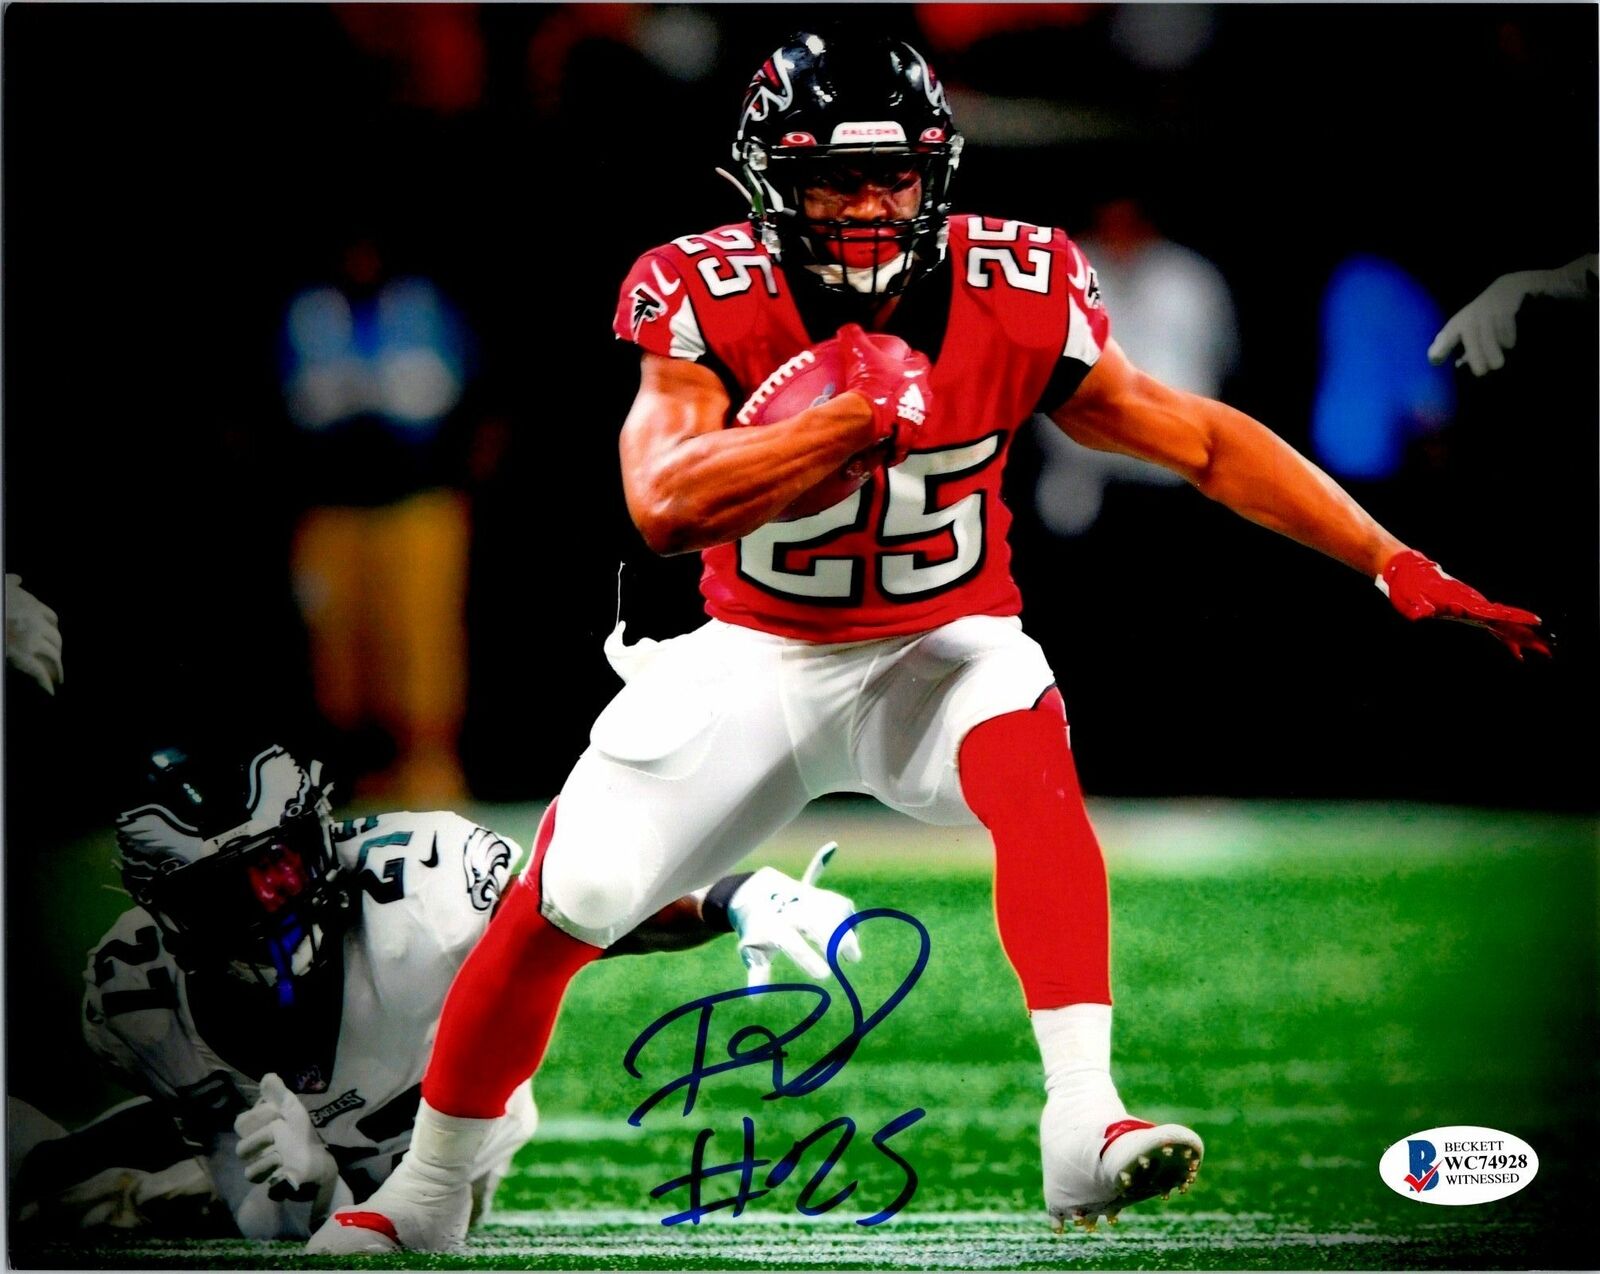 Ito Smith Signed 8x10 Photo Poster painting - Atlanta Falcons Autographed NFL - JSA COA